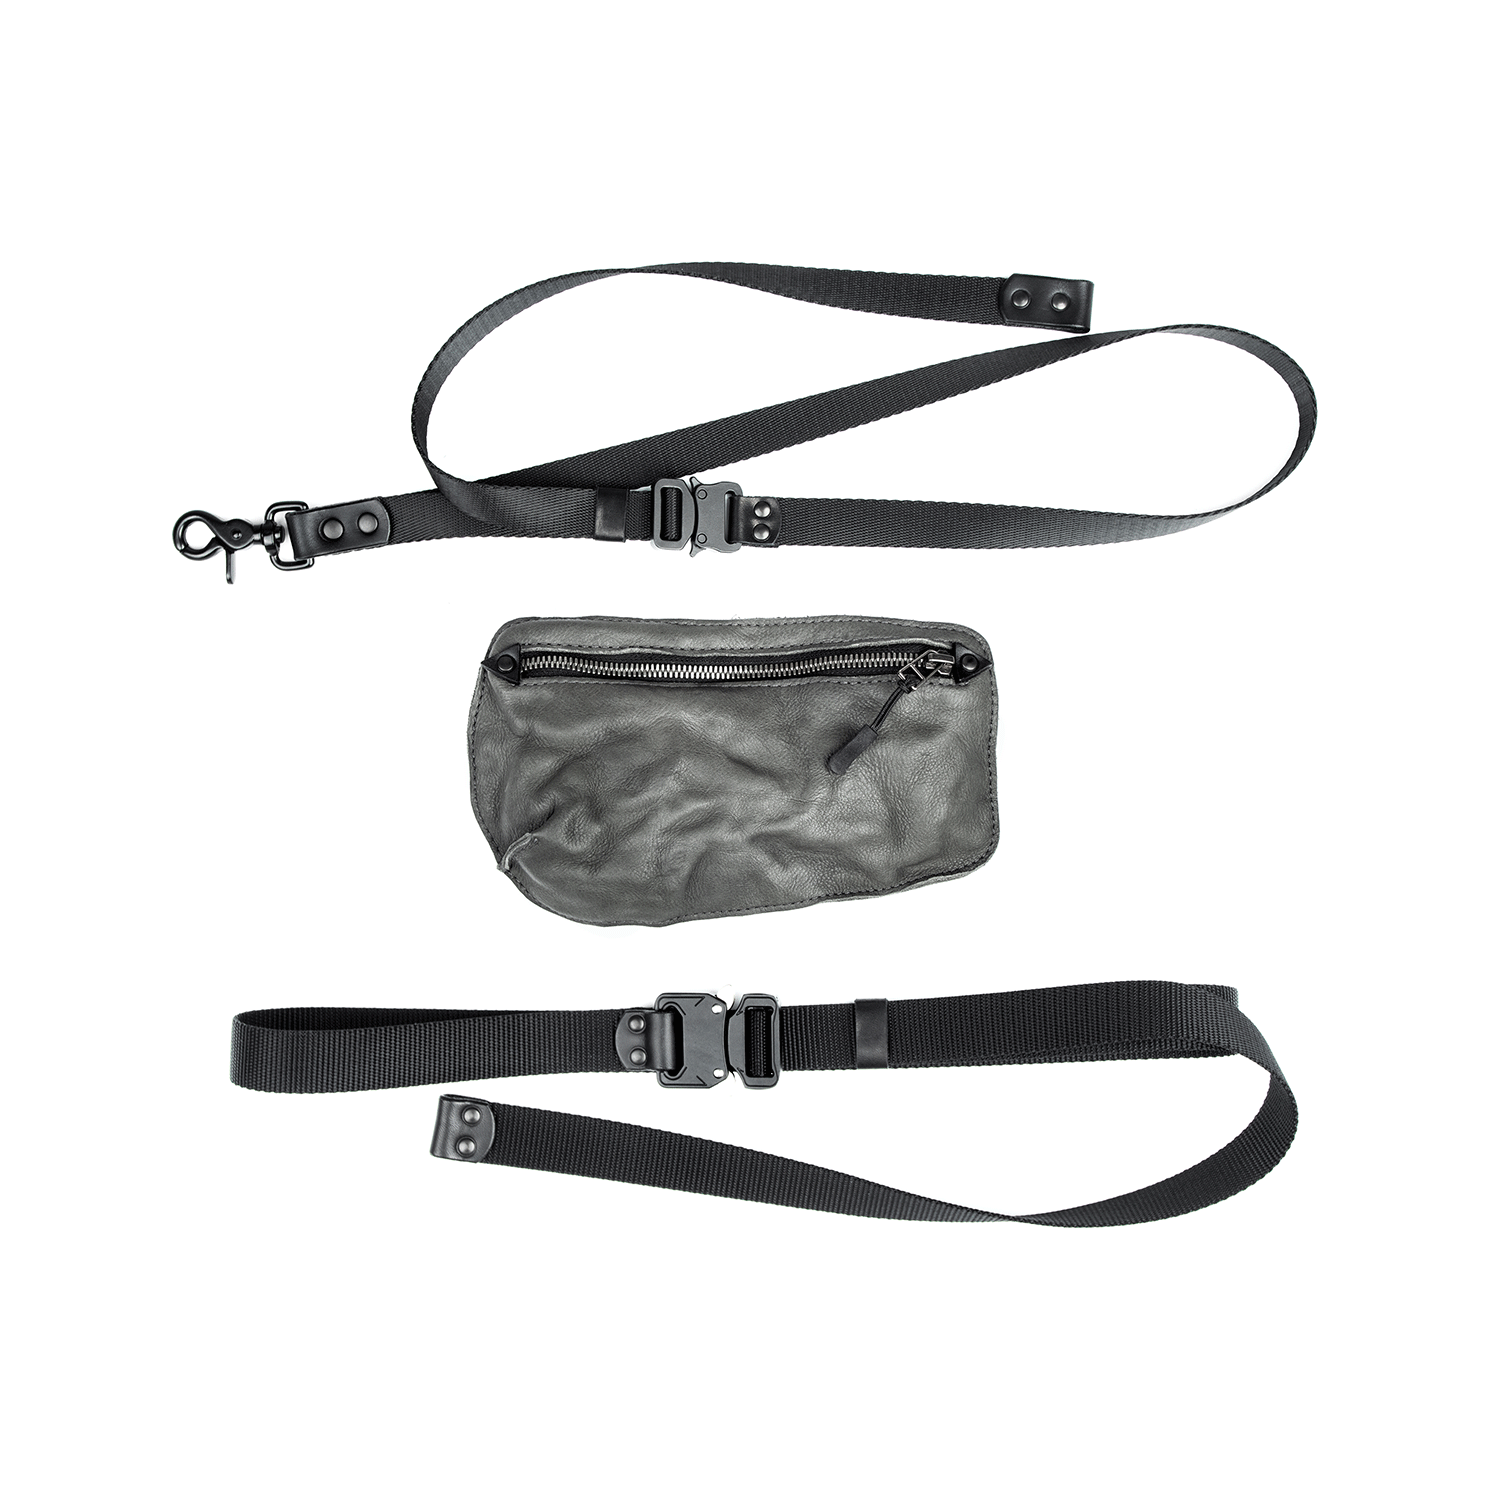 Black leather bags - Avantgarde handmade bags - Online shop — TEO+NG